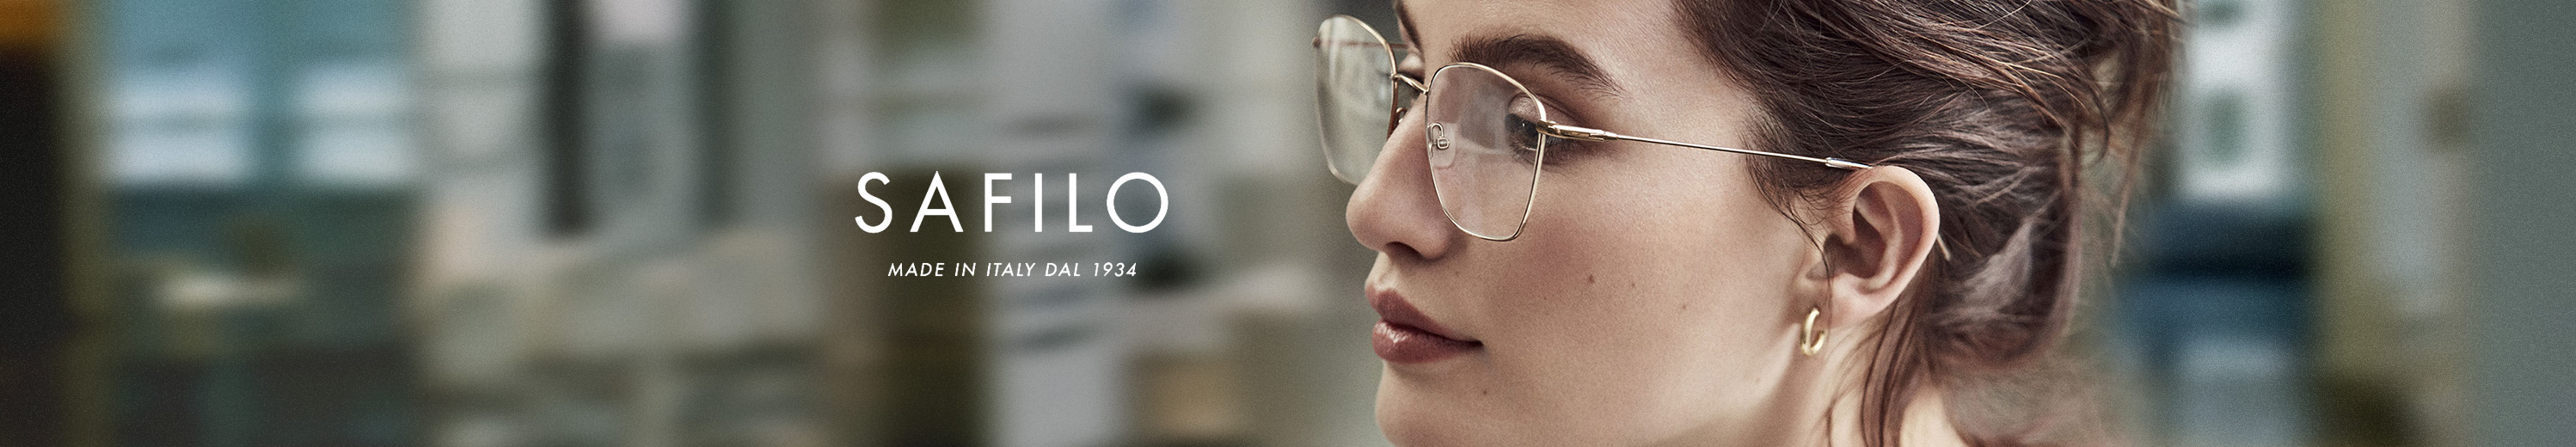 Safilo Glasses and Eyewear